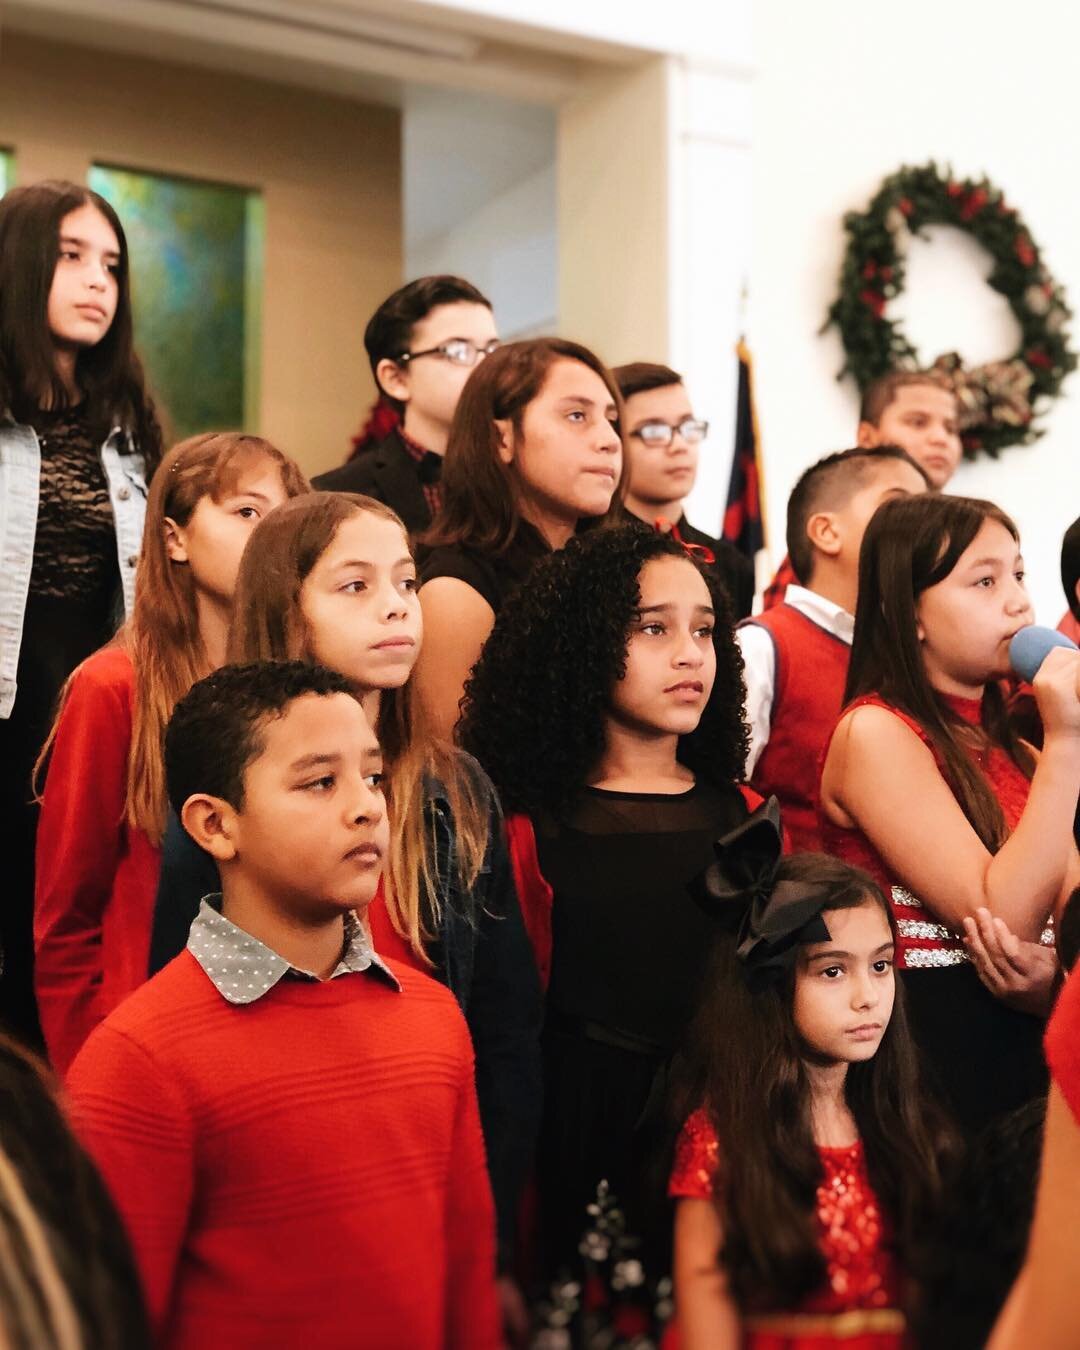 We are so proud of our Miami Springs SDA School Choir! Good job to all of the children who sang 👏
.
#mssdac#Christmas#chori#schoolchoir#sing#praise#childrenchior#miamisprings#school#miamispringsschool#Christmaschoir